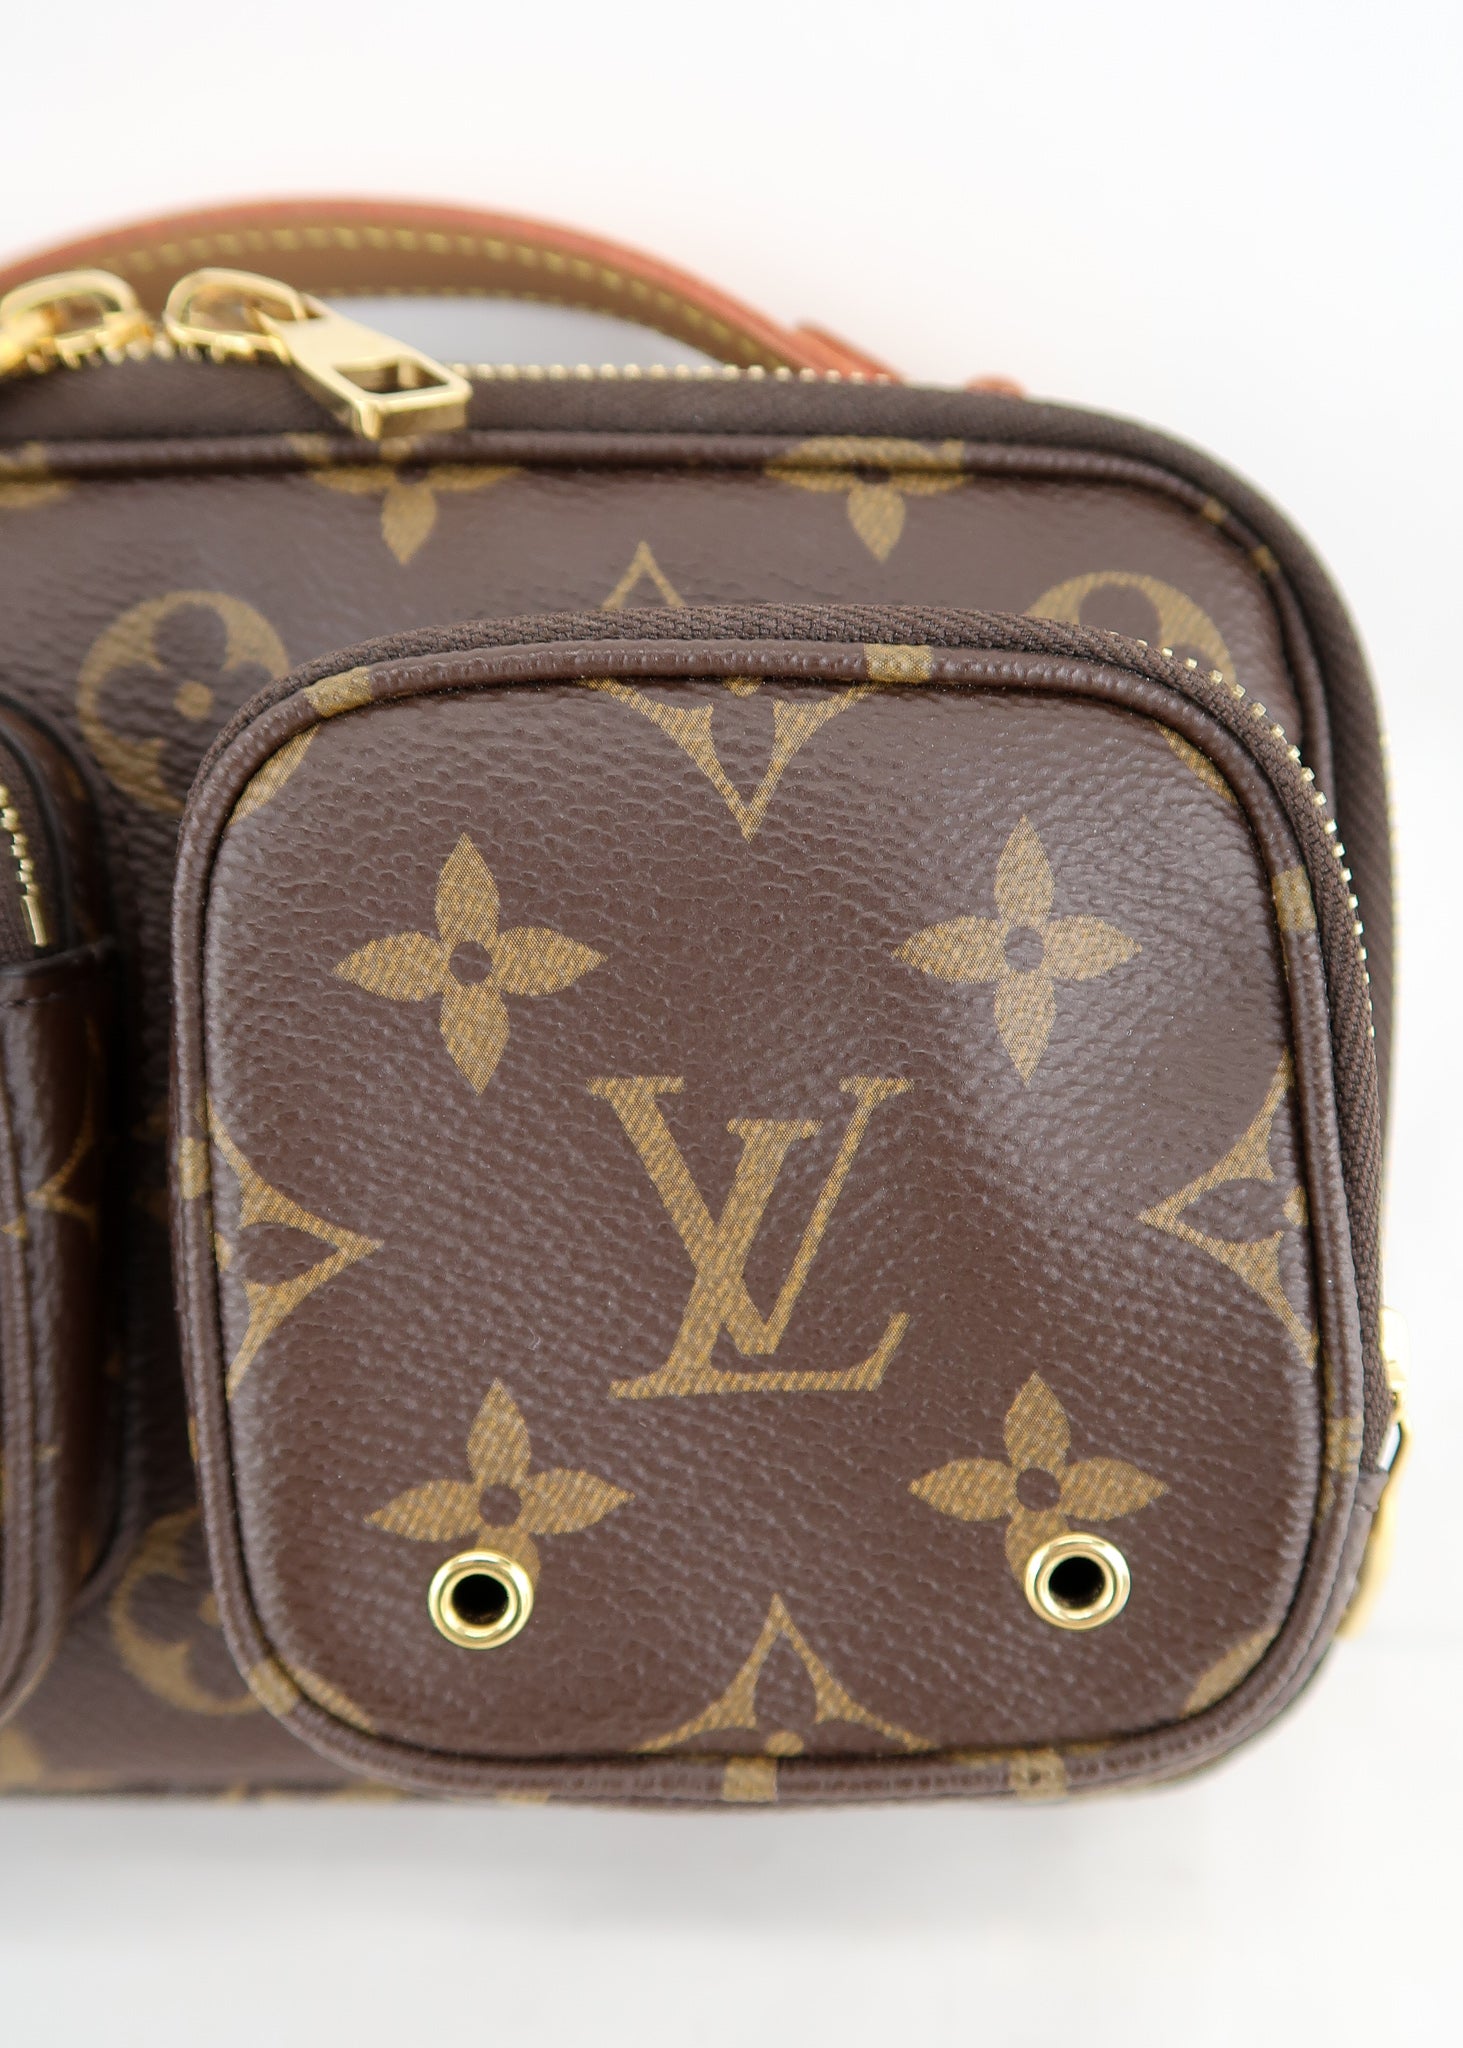 🔥 Muški novčanici - Louis Vuitton! 🔥 - Modni studio Exclusive